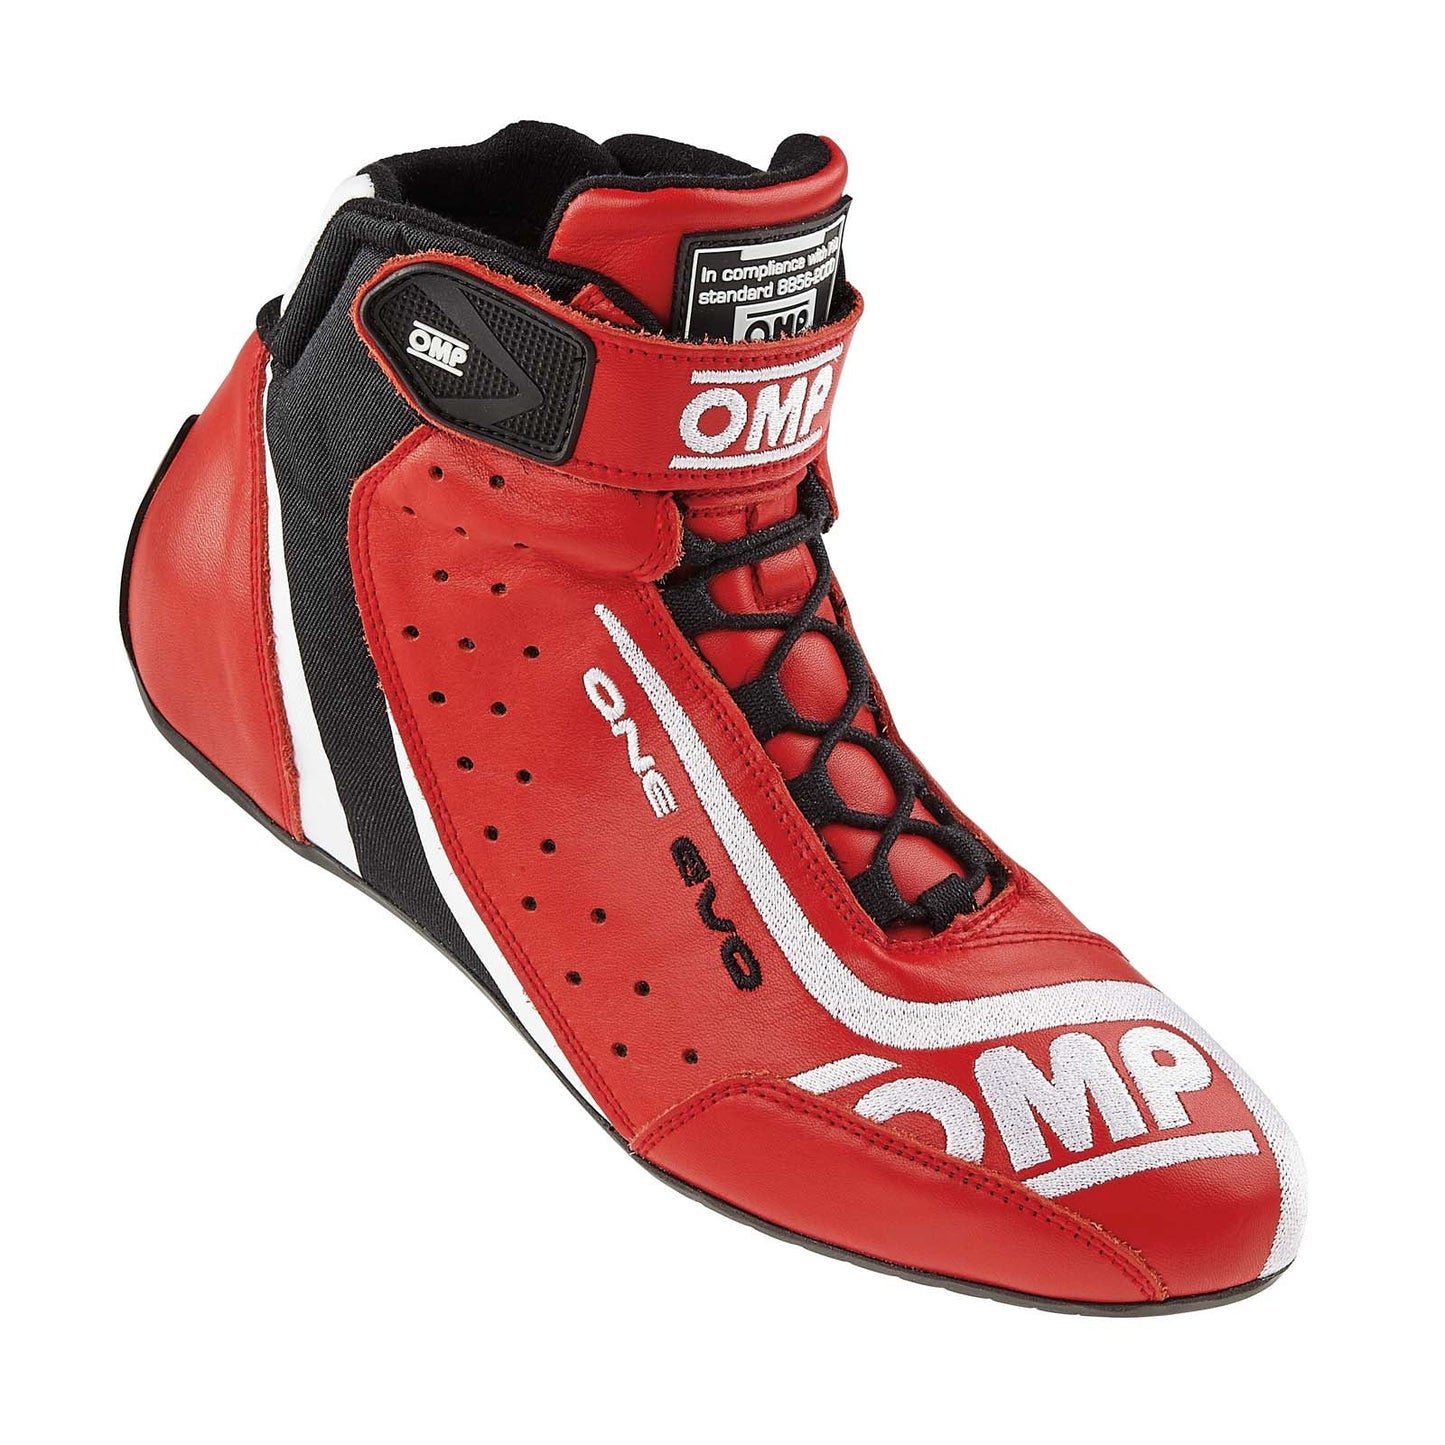 OMP One Evo Racing Shoes